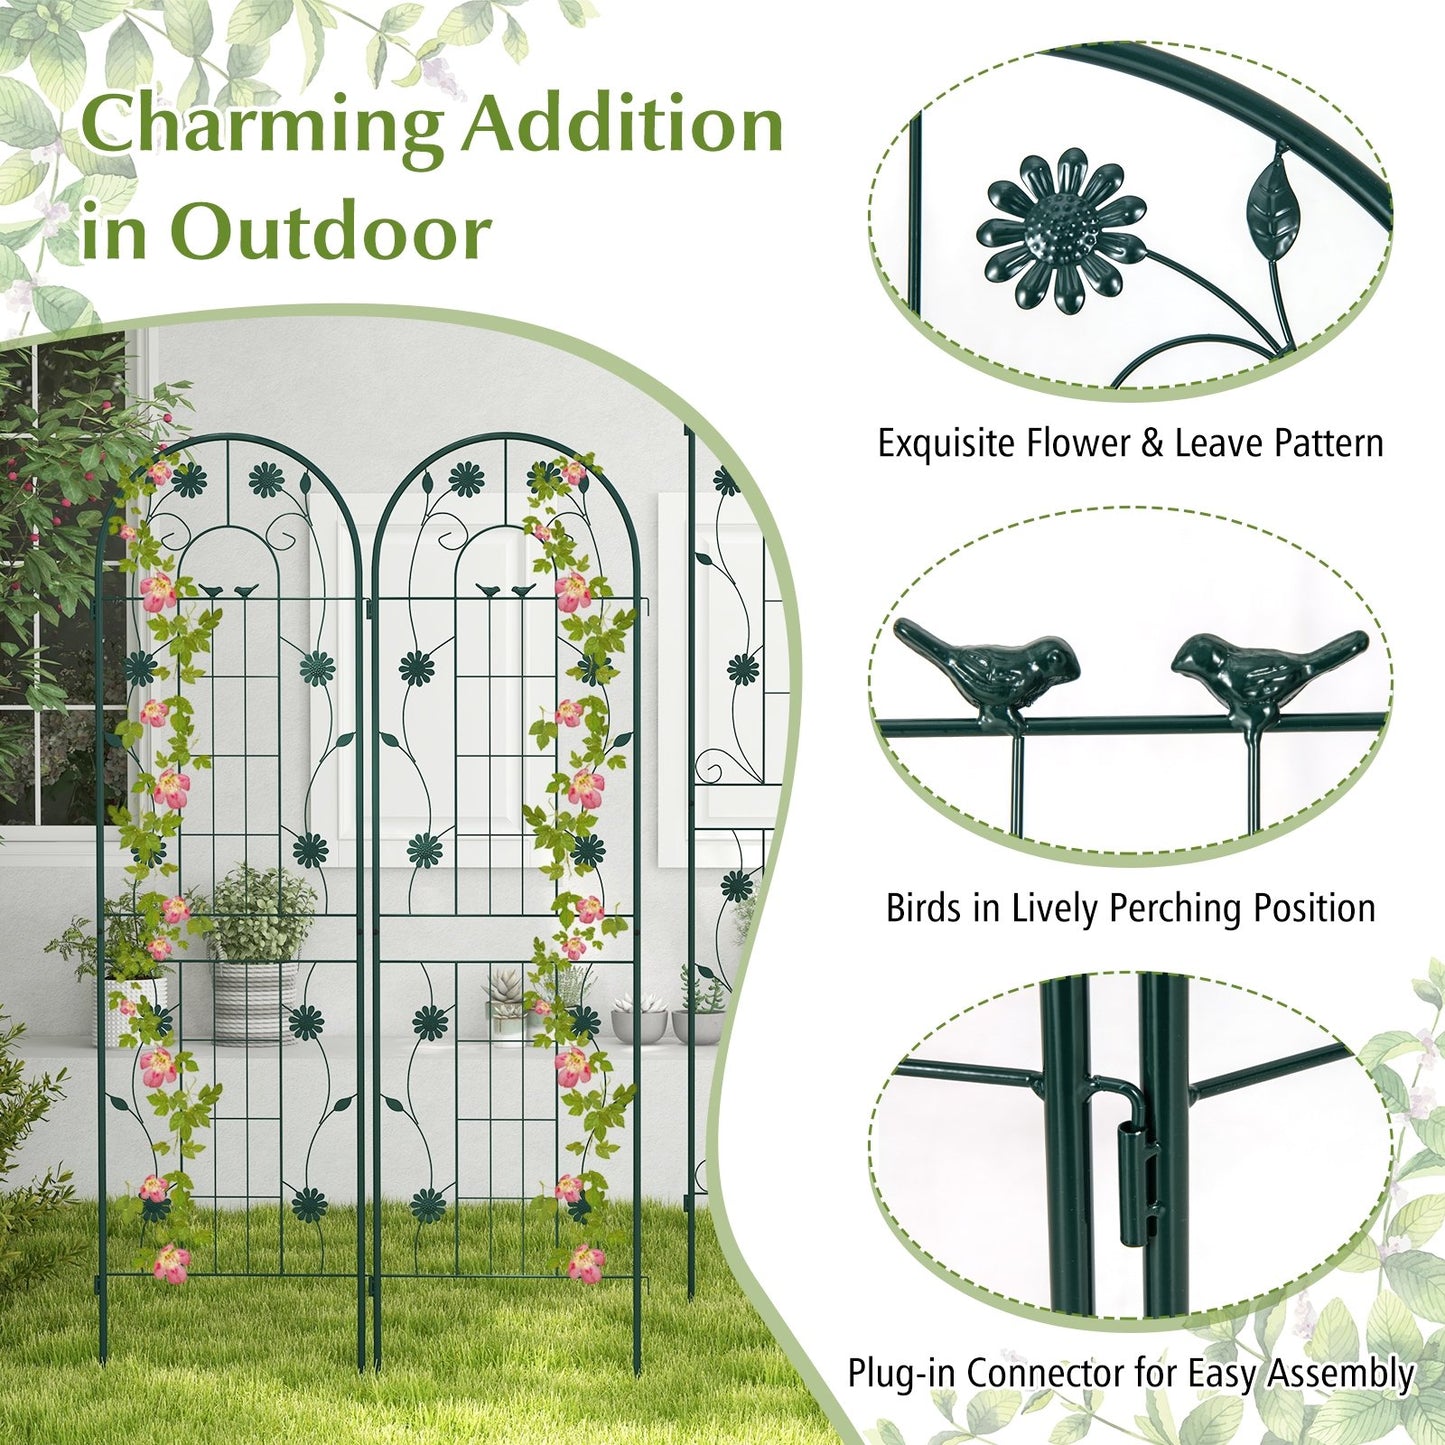 4 Pack 71 x 20 Inches Metal Garden Trellis for Climbing Plants, Green